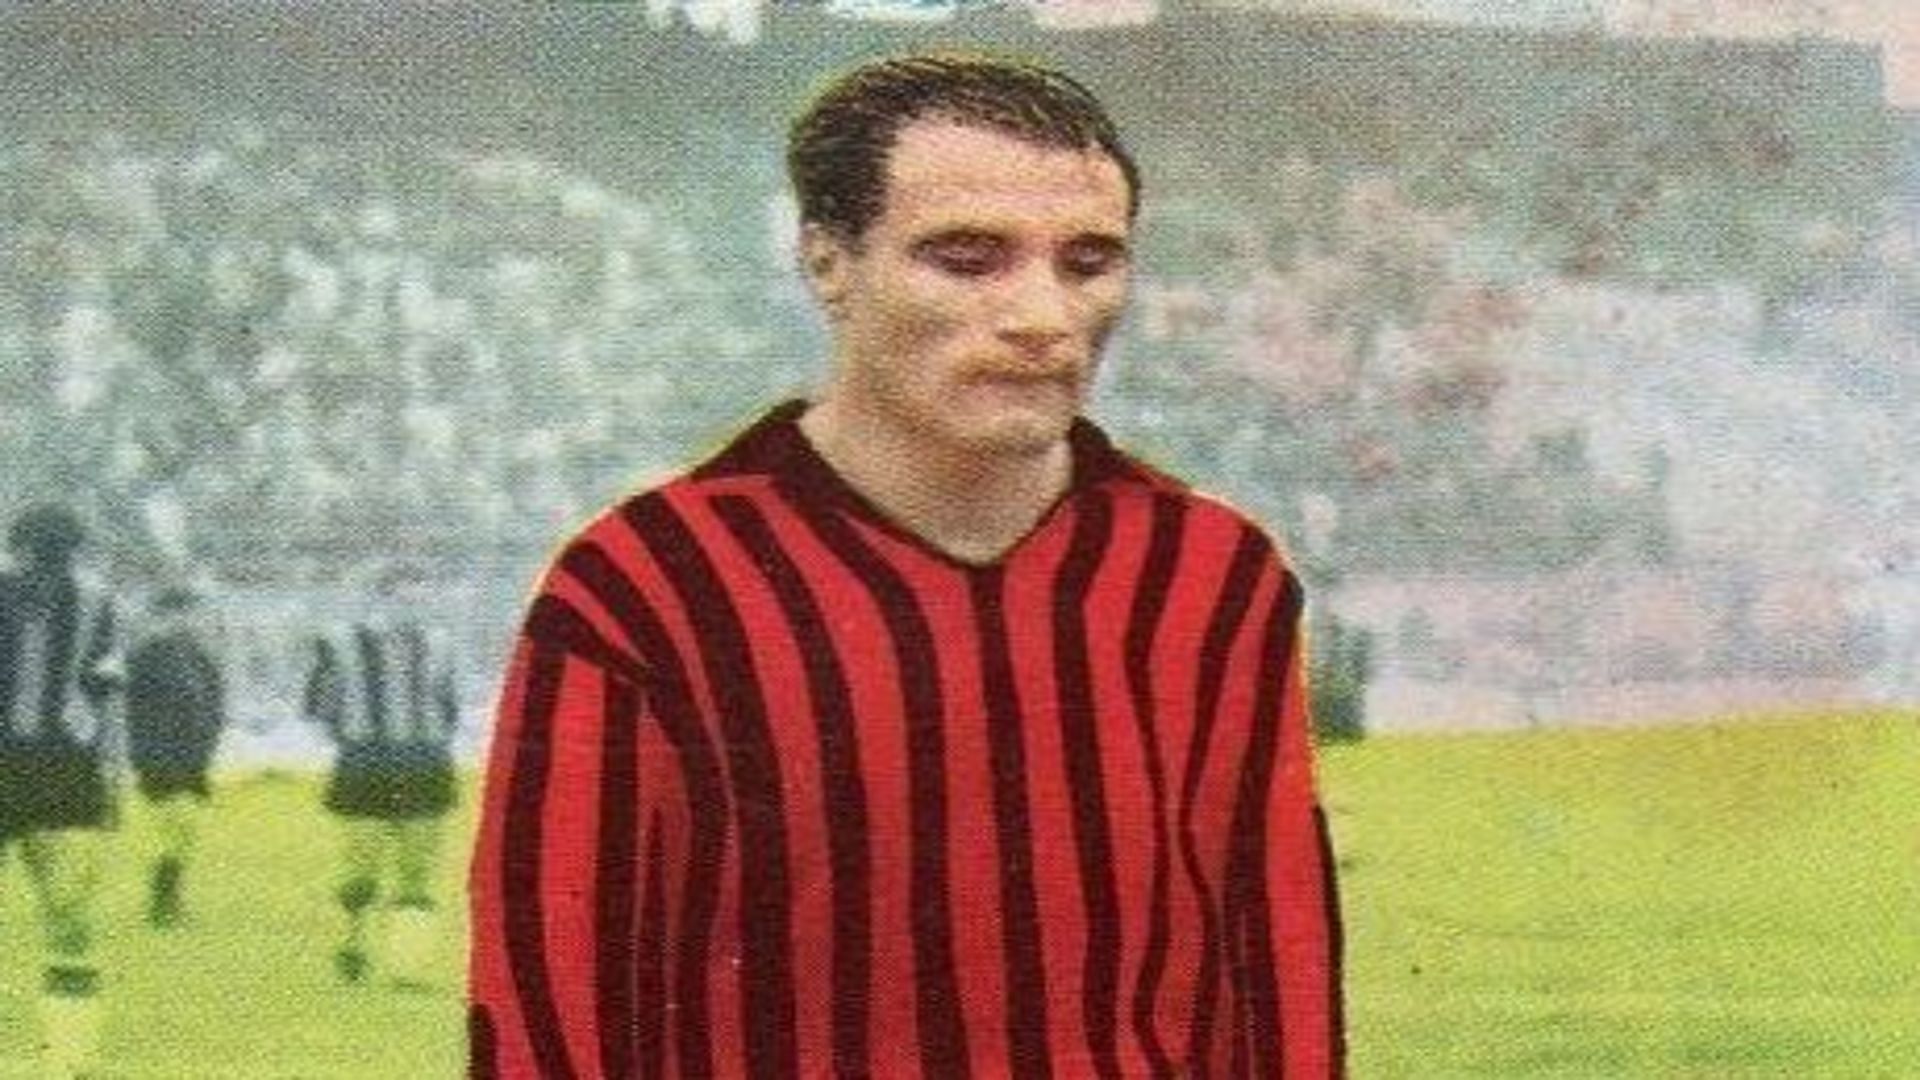 Paolo Ferrario wearing the Rossoneri colours